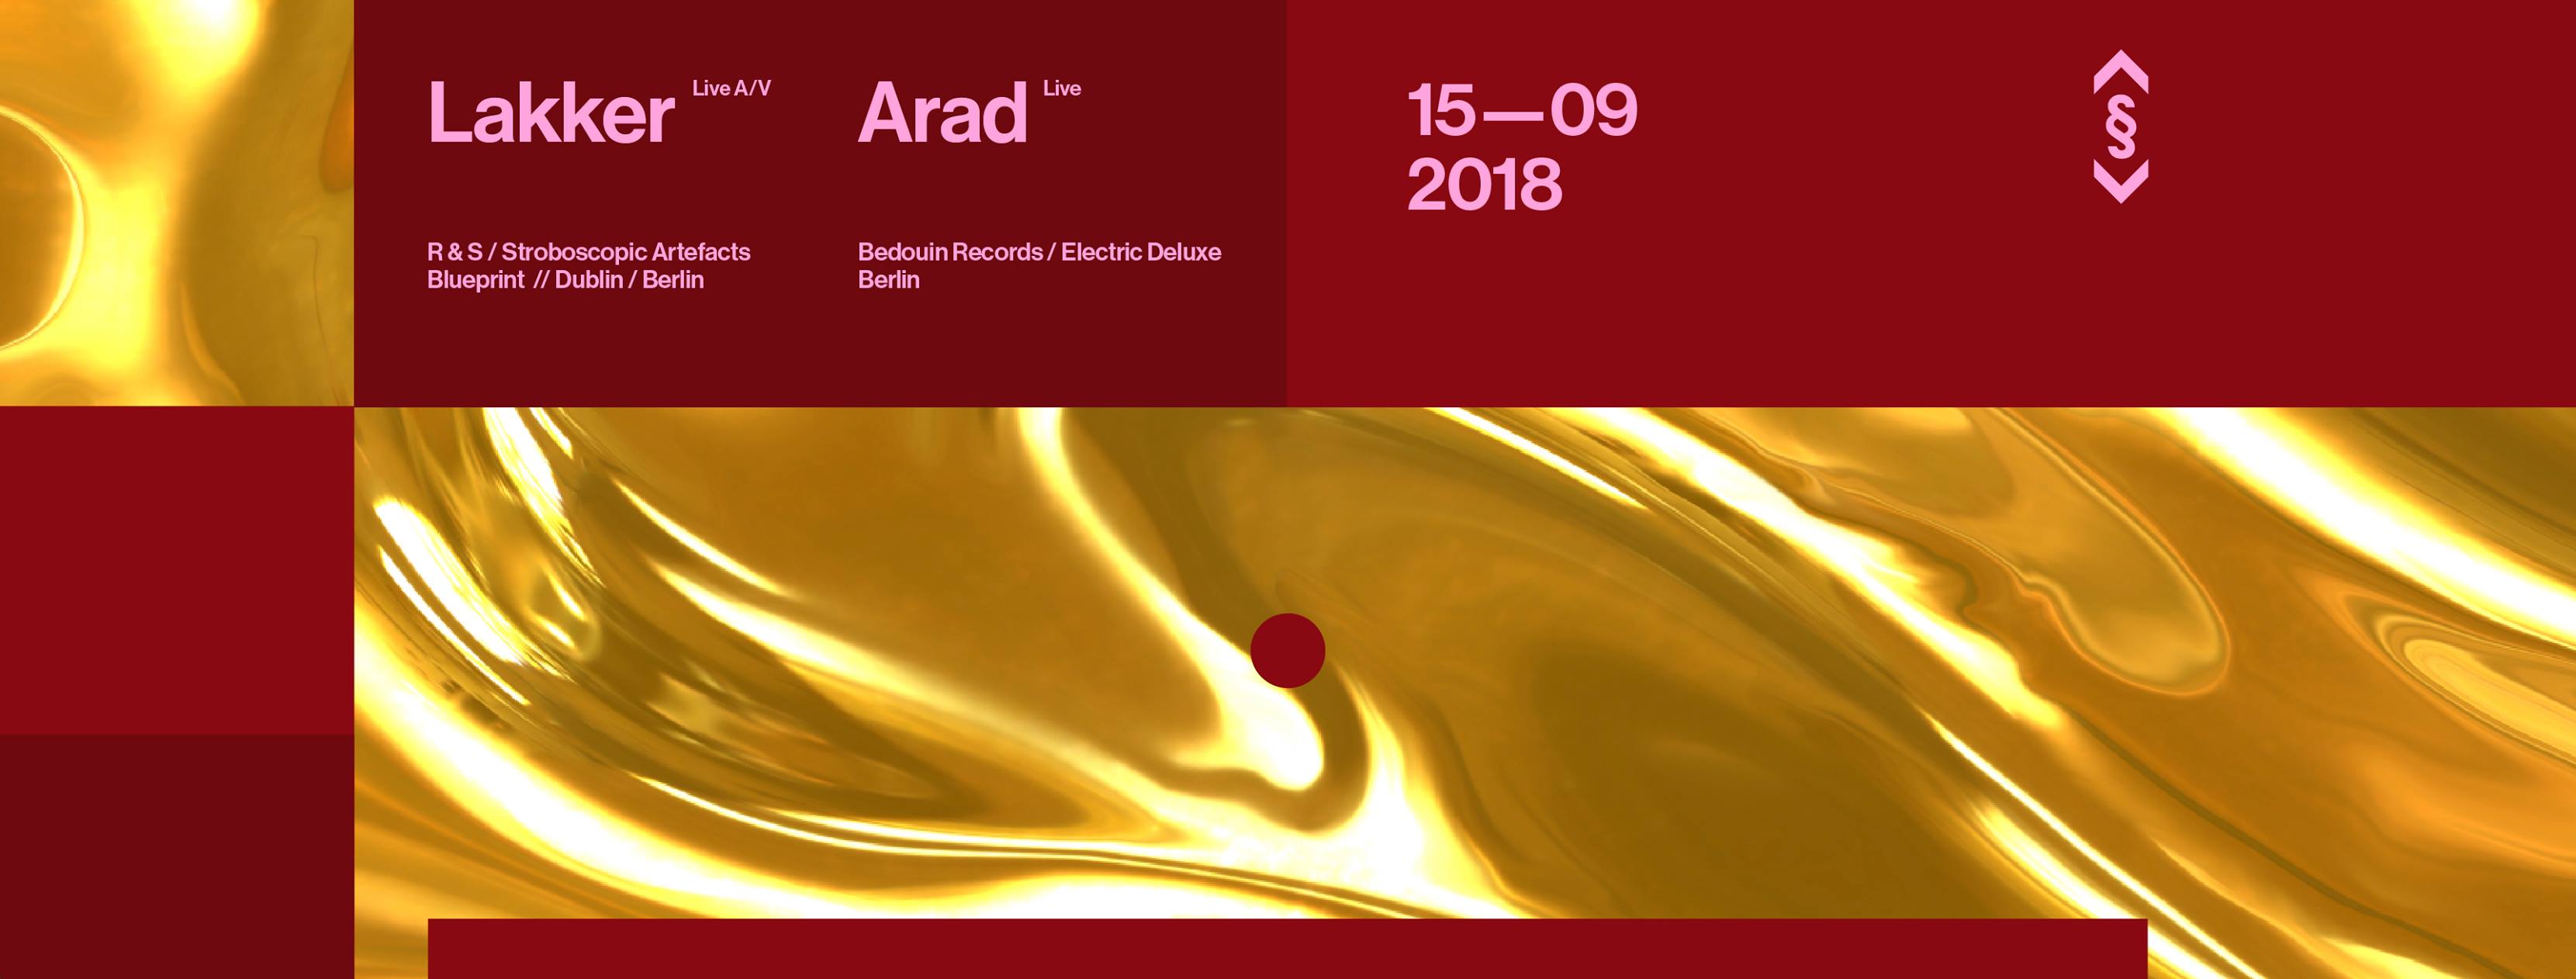 Lakker Live A/V & Arad Live 15.09.2018 Drugstore